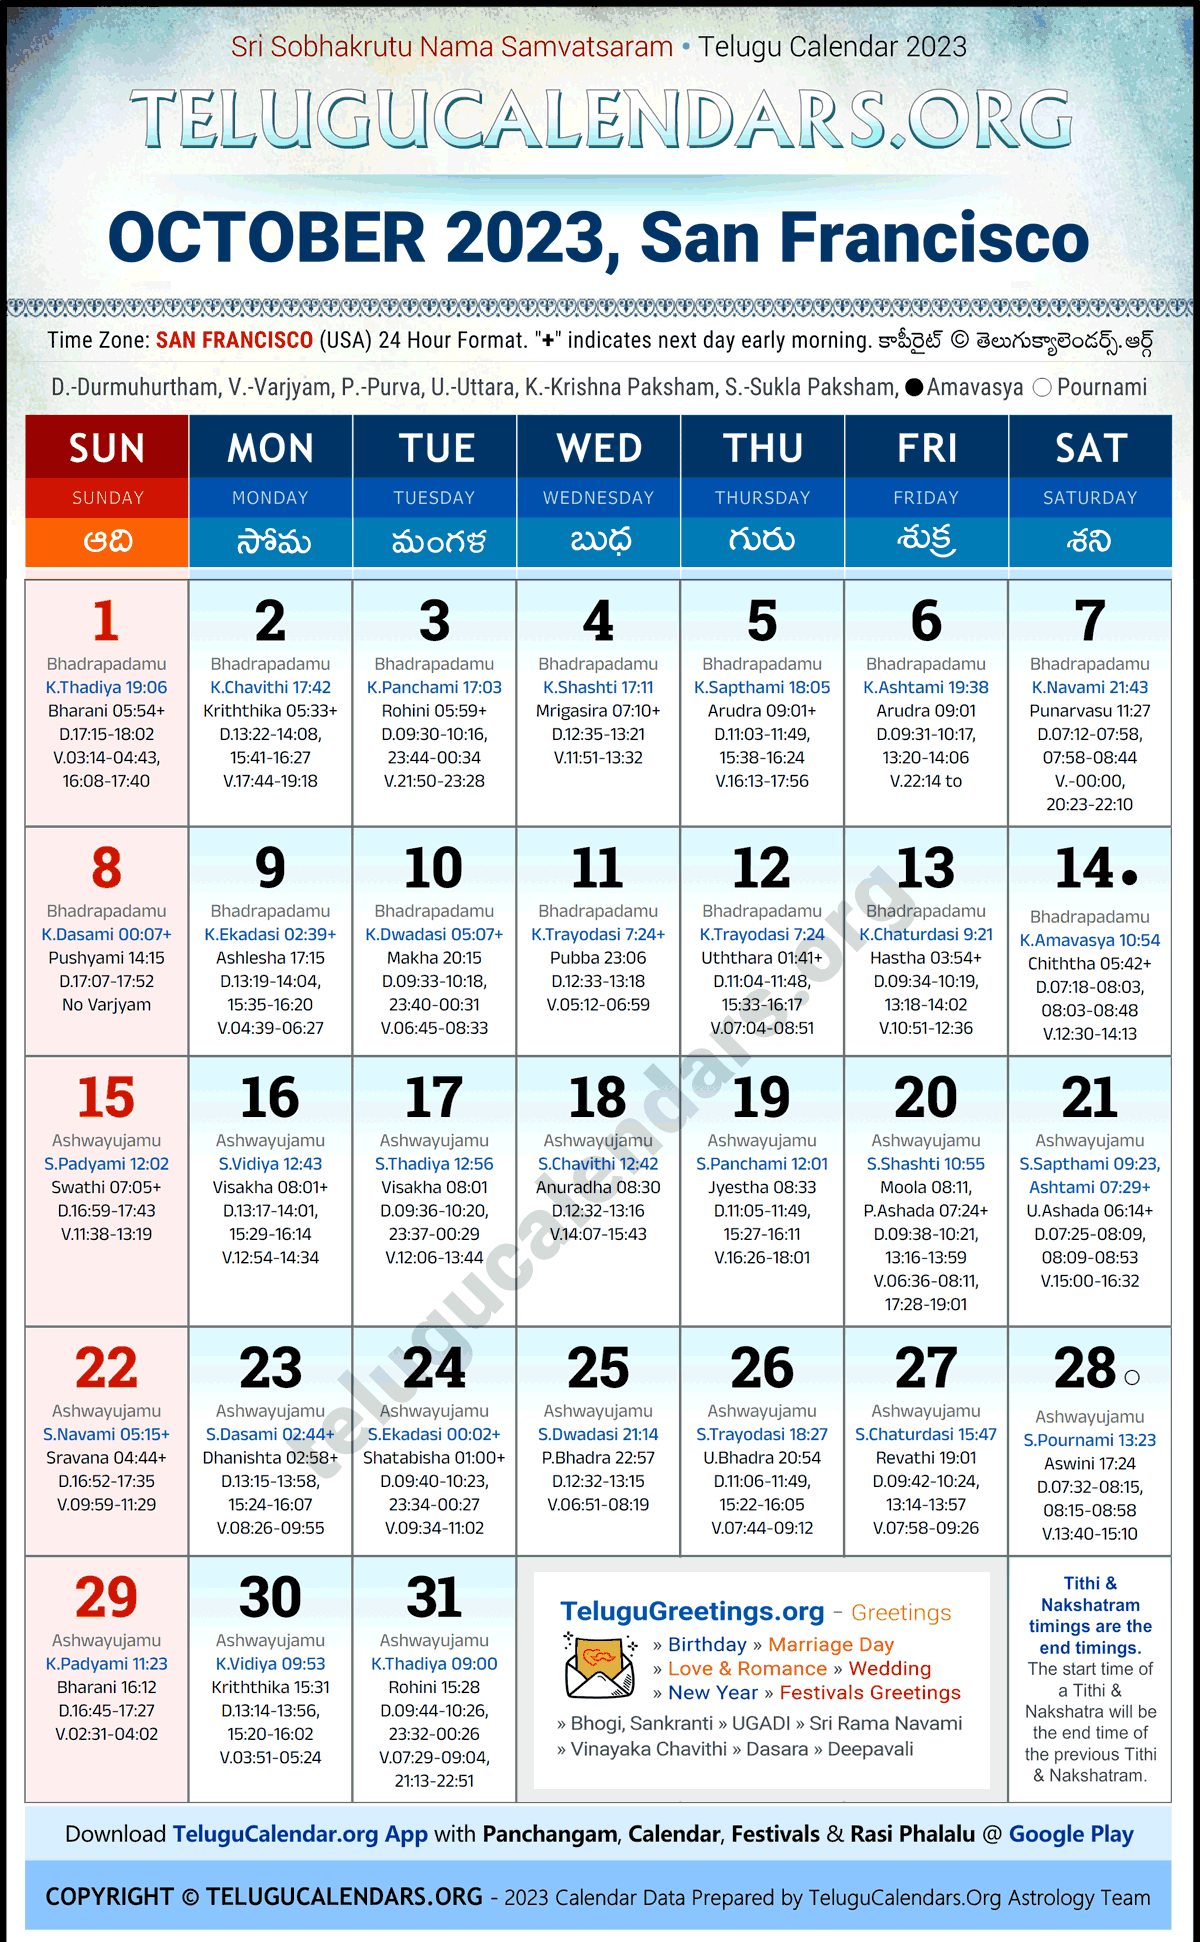 Telugu Calendar 2023 October Festivals for San Francisco